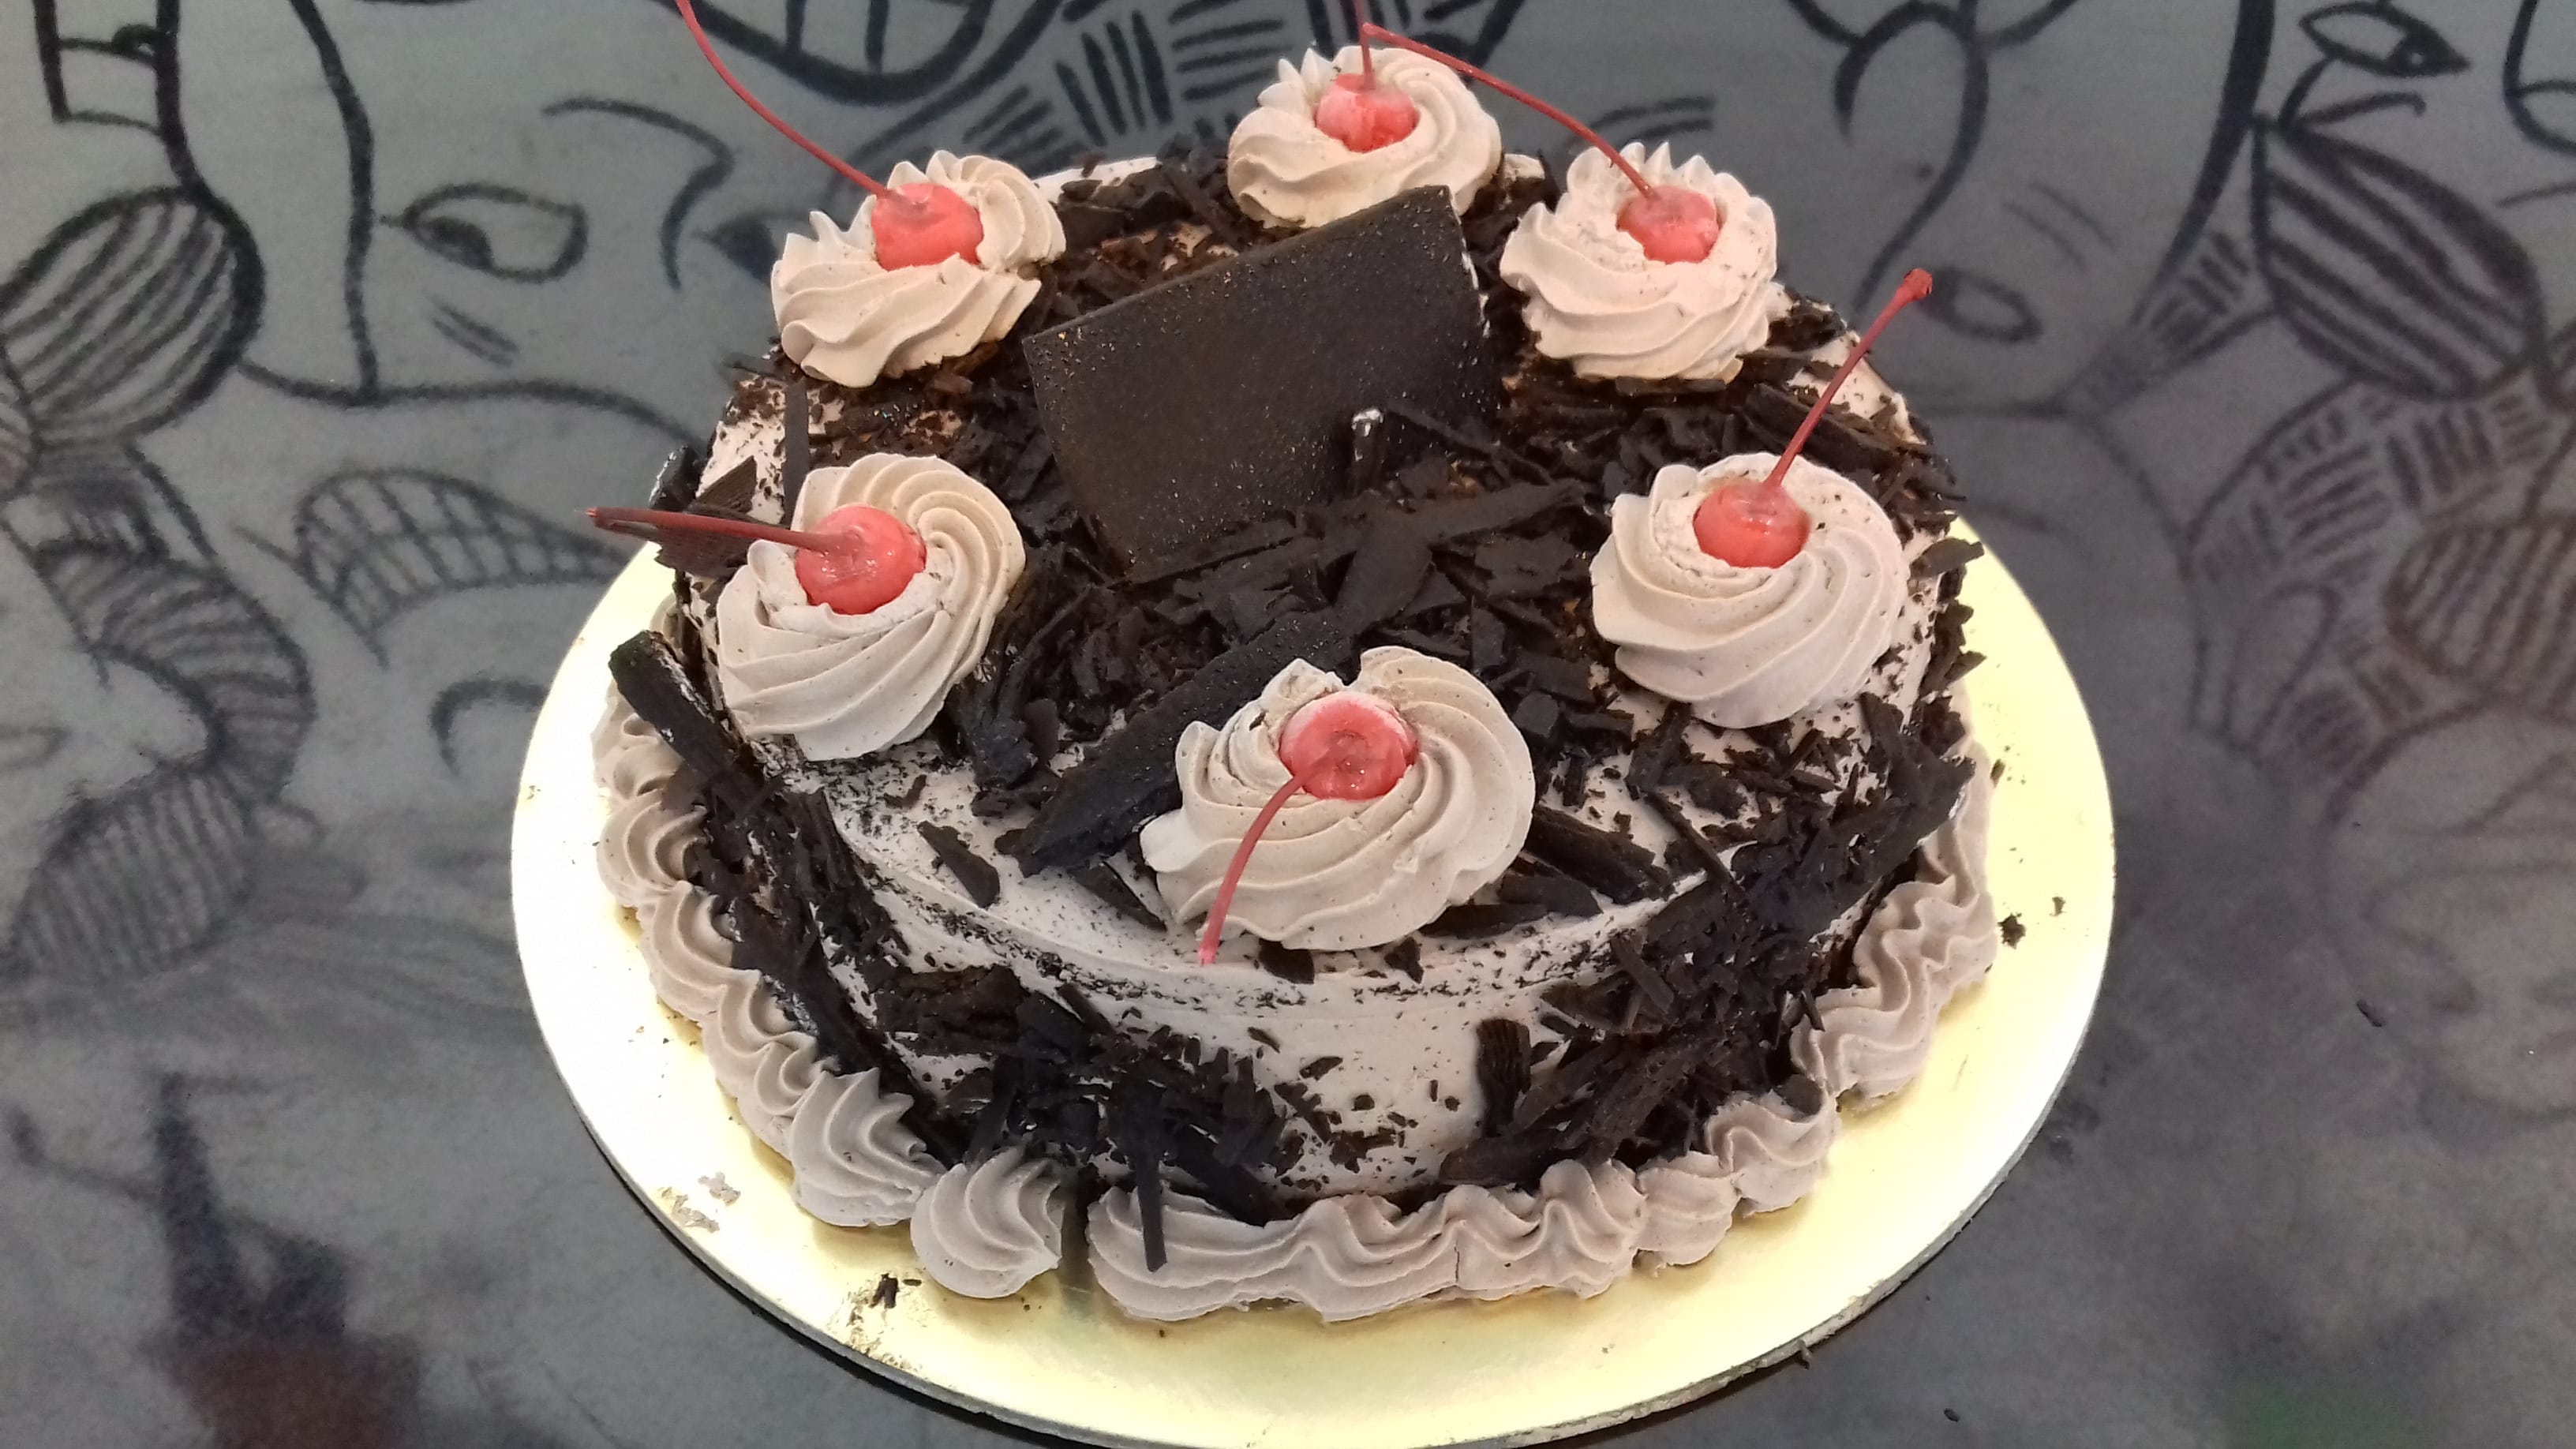 Reviews of Celebrations The Cake Shop, Wakad, Pune | Zomato